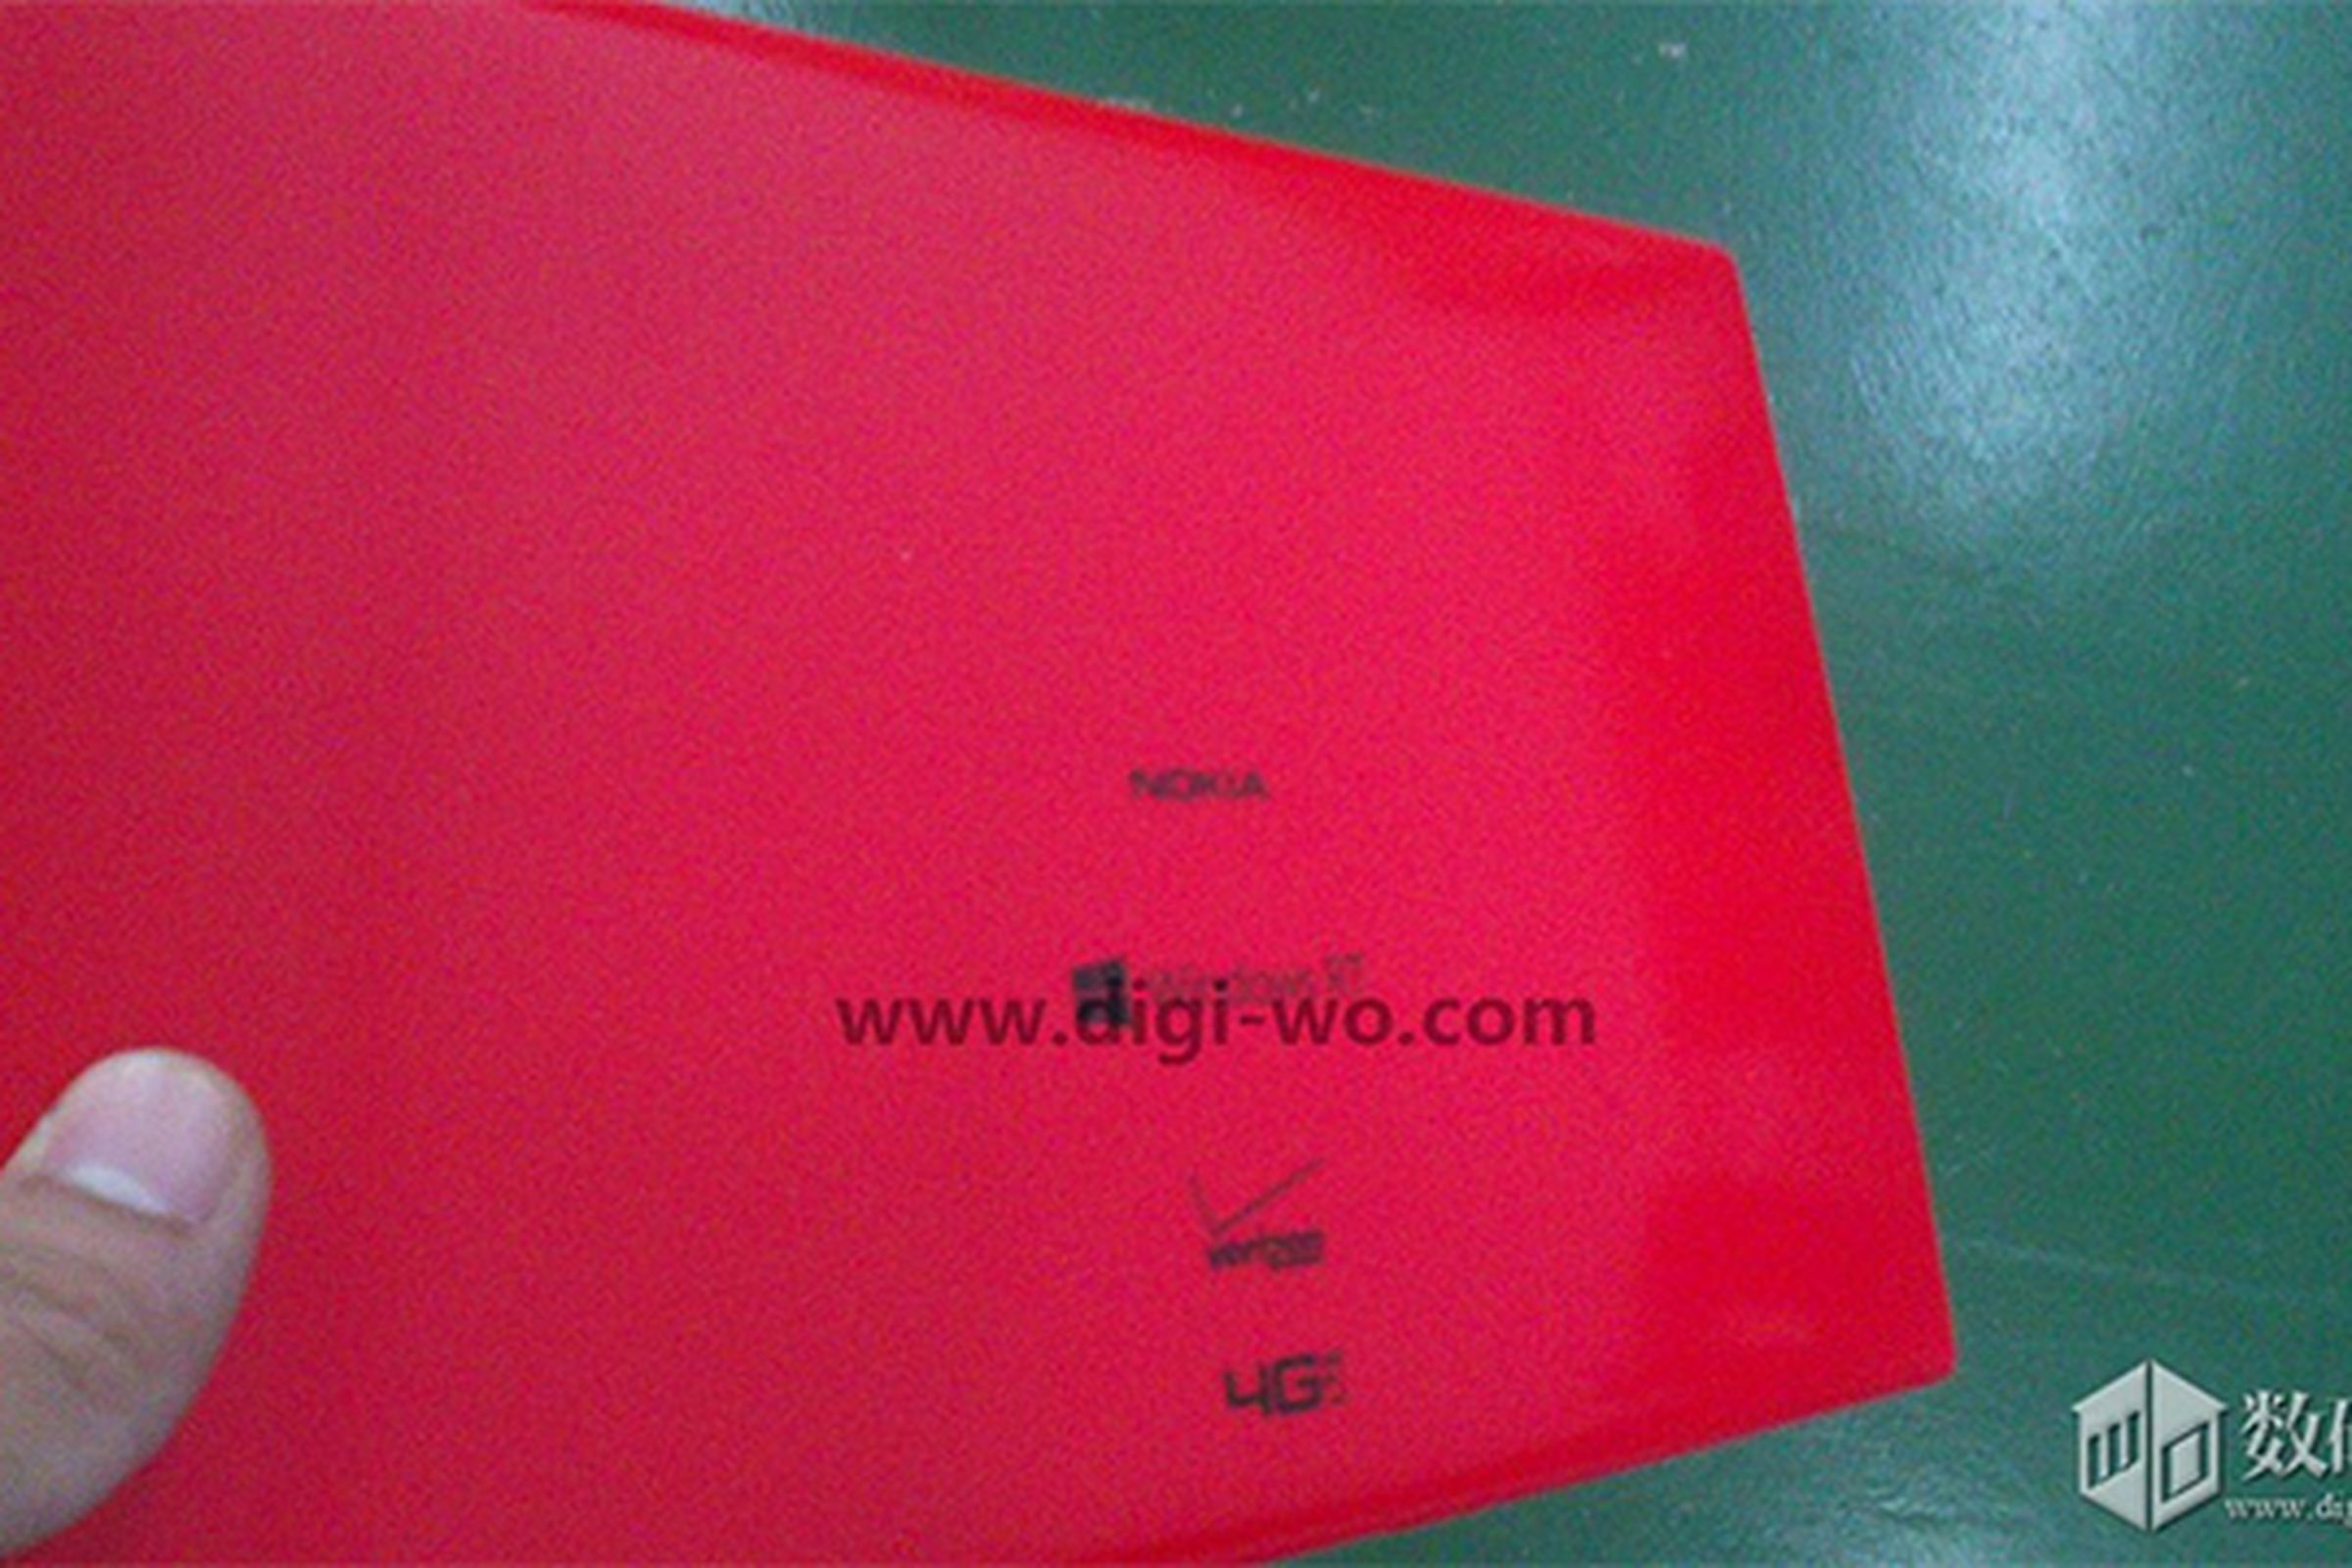 Nokia Windows RT tablet (Digiwo)